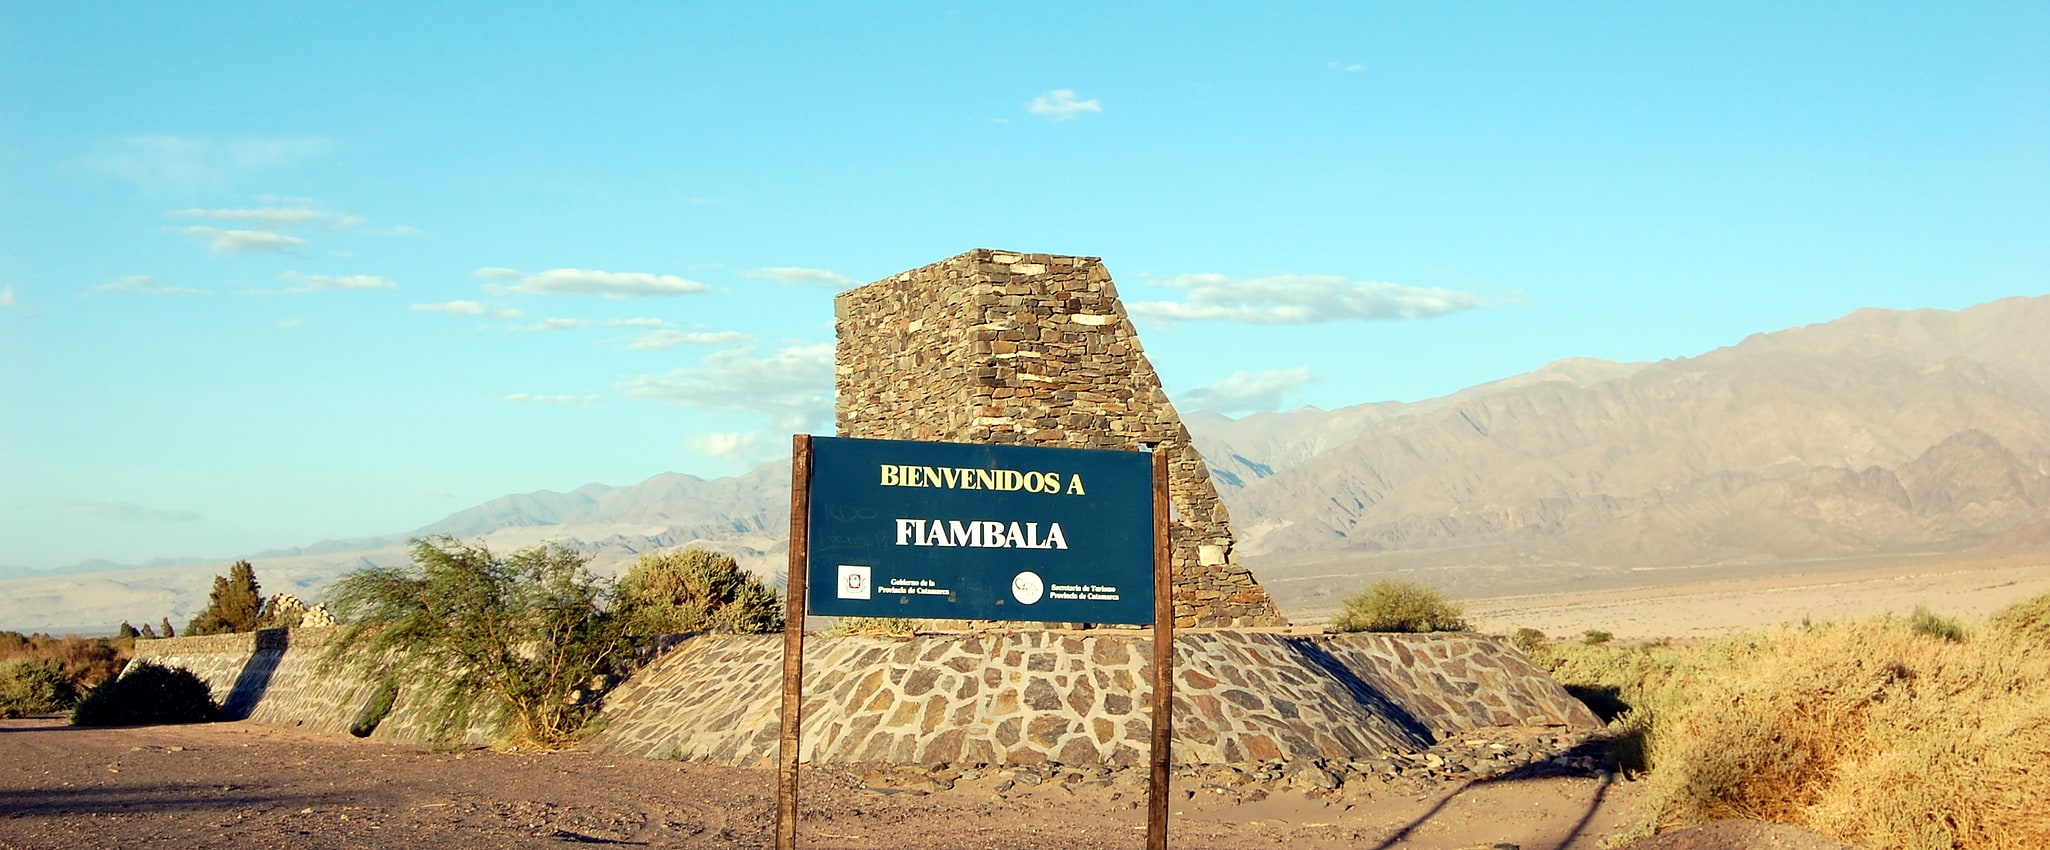 Fiambalá, Argentina